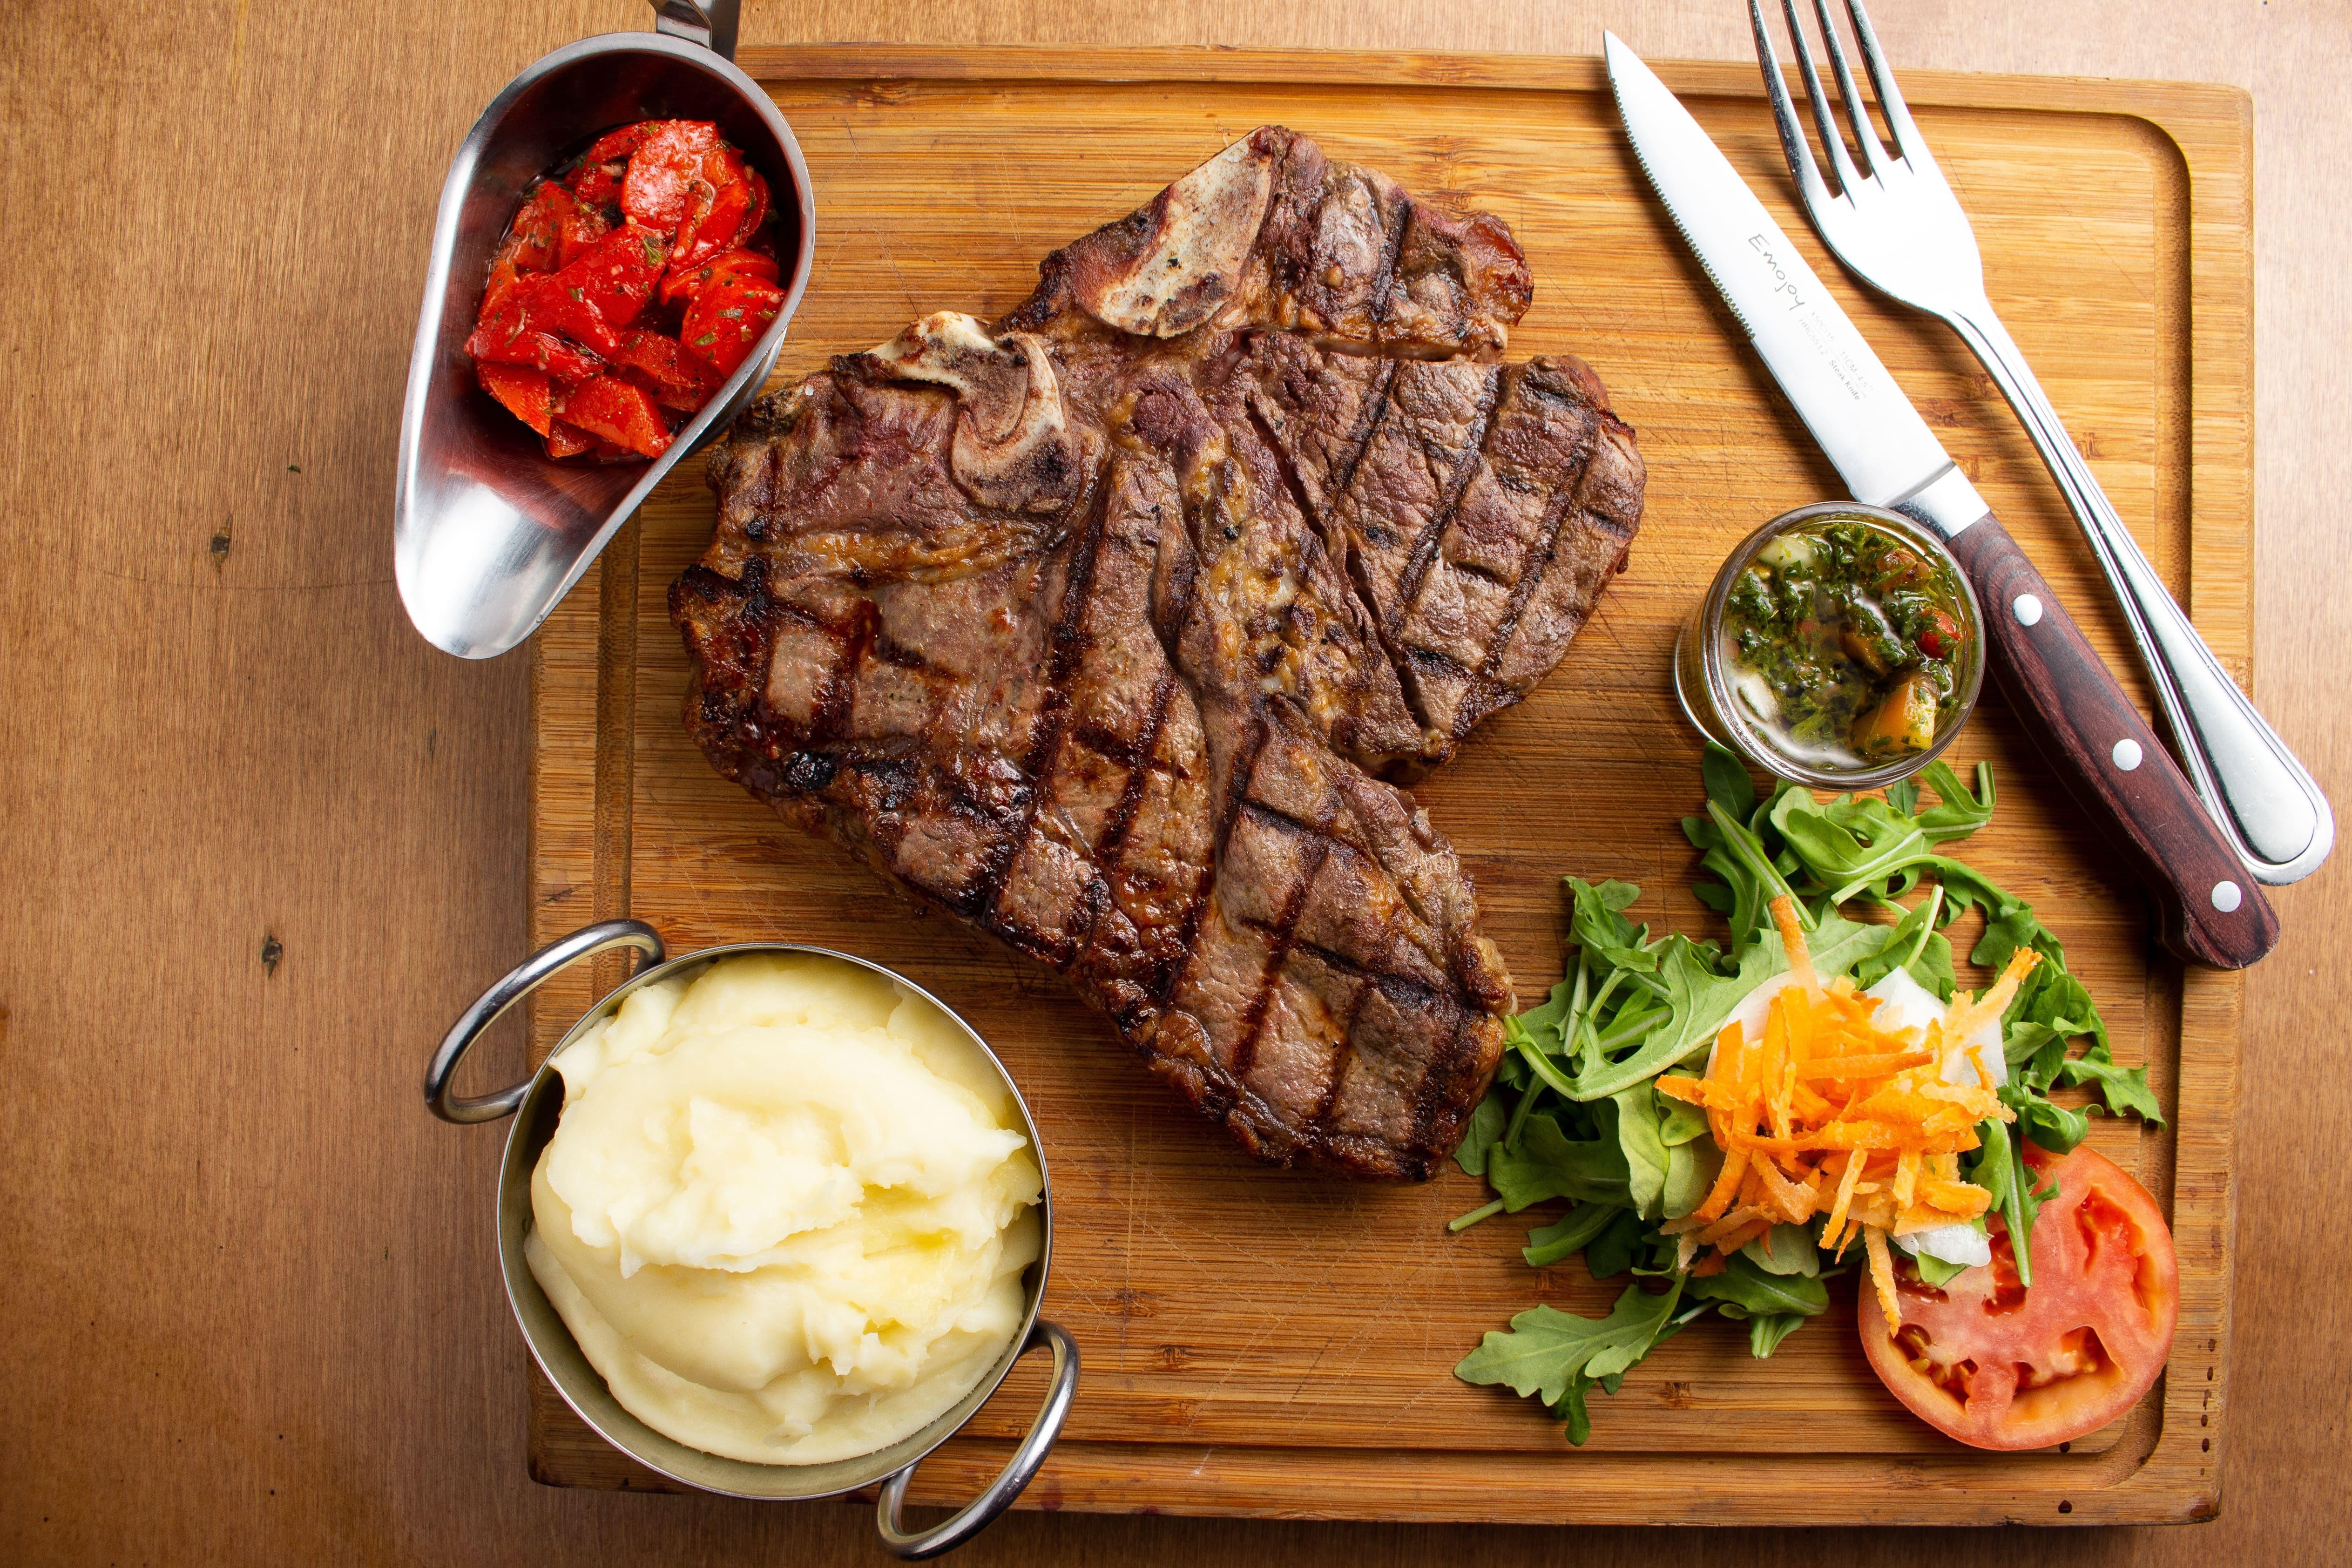 22oz Porterhouse Steak